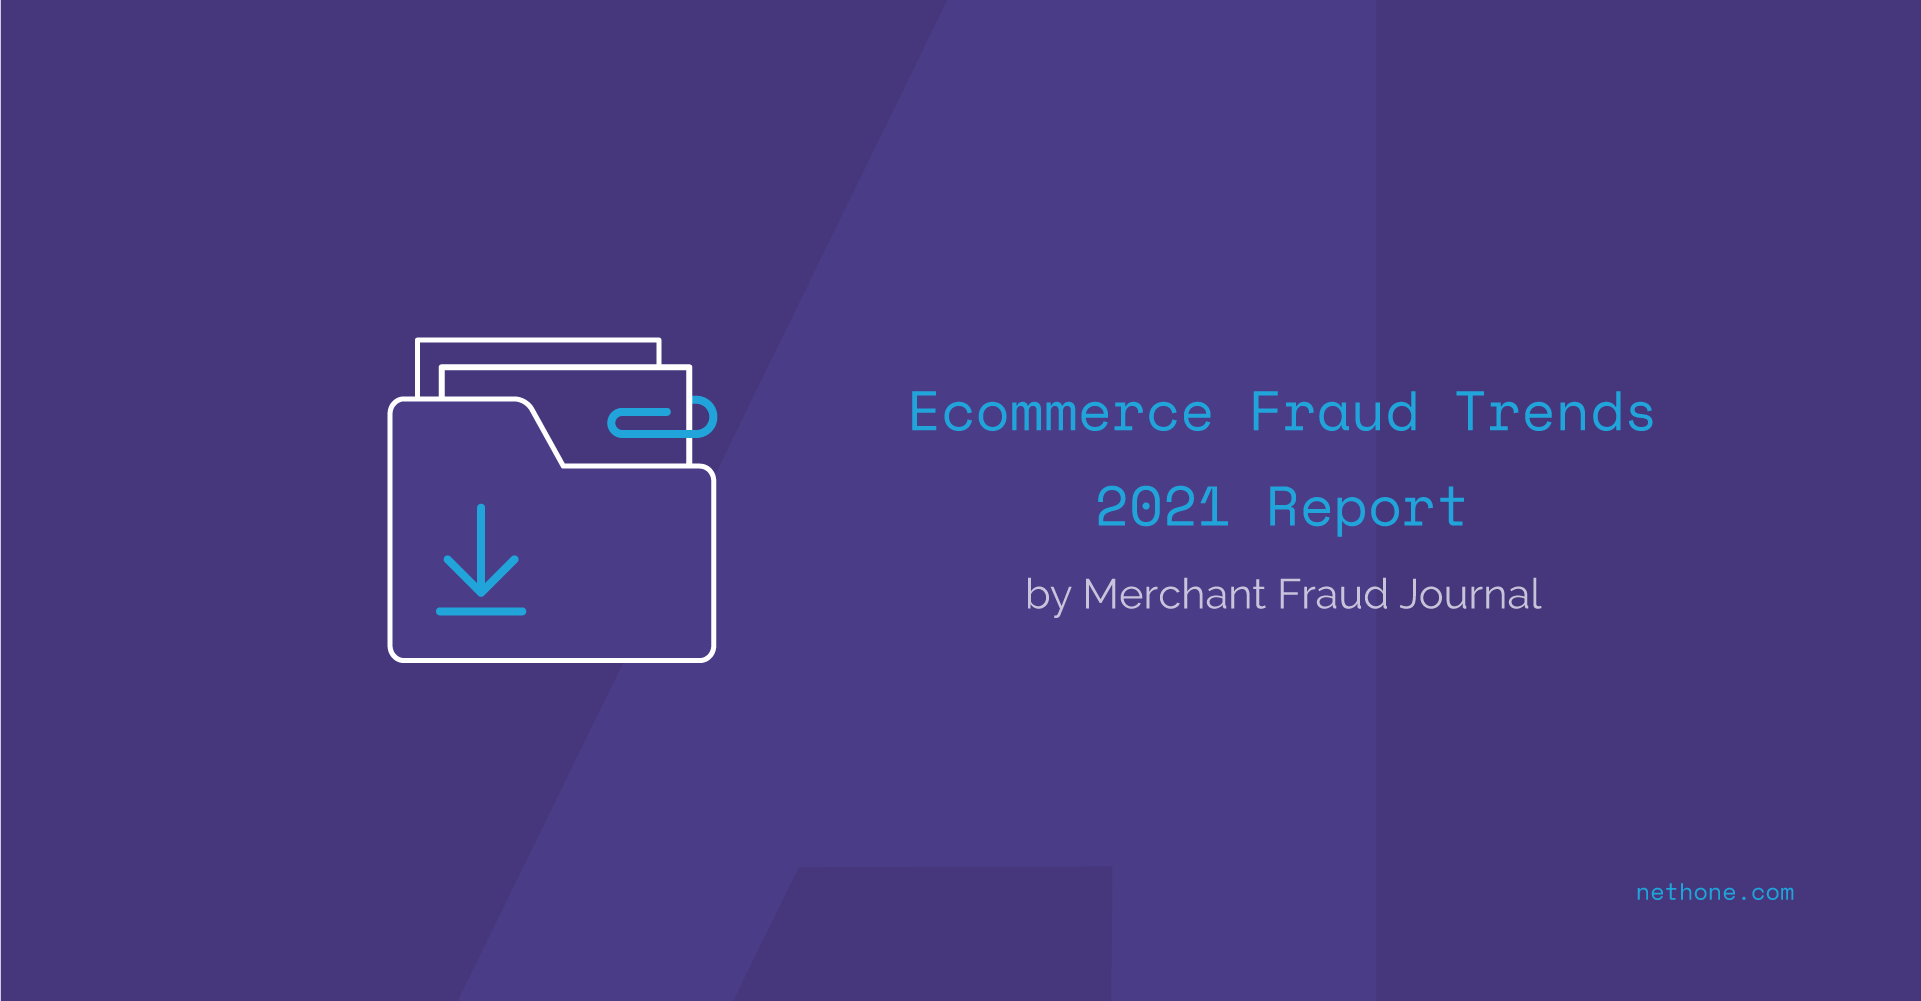 MFJ Ecommerce Fraud Trends Report 2021